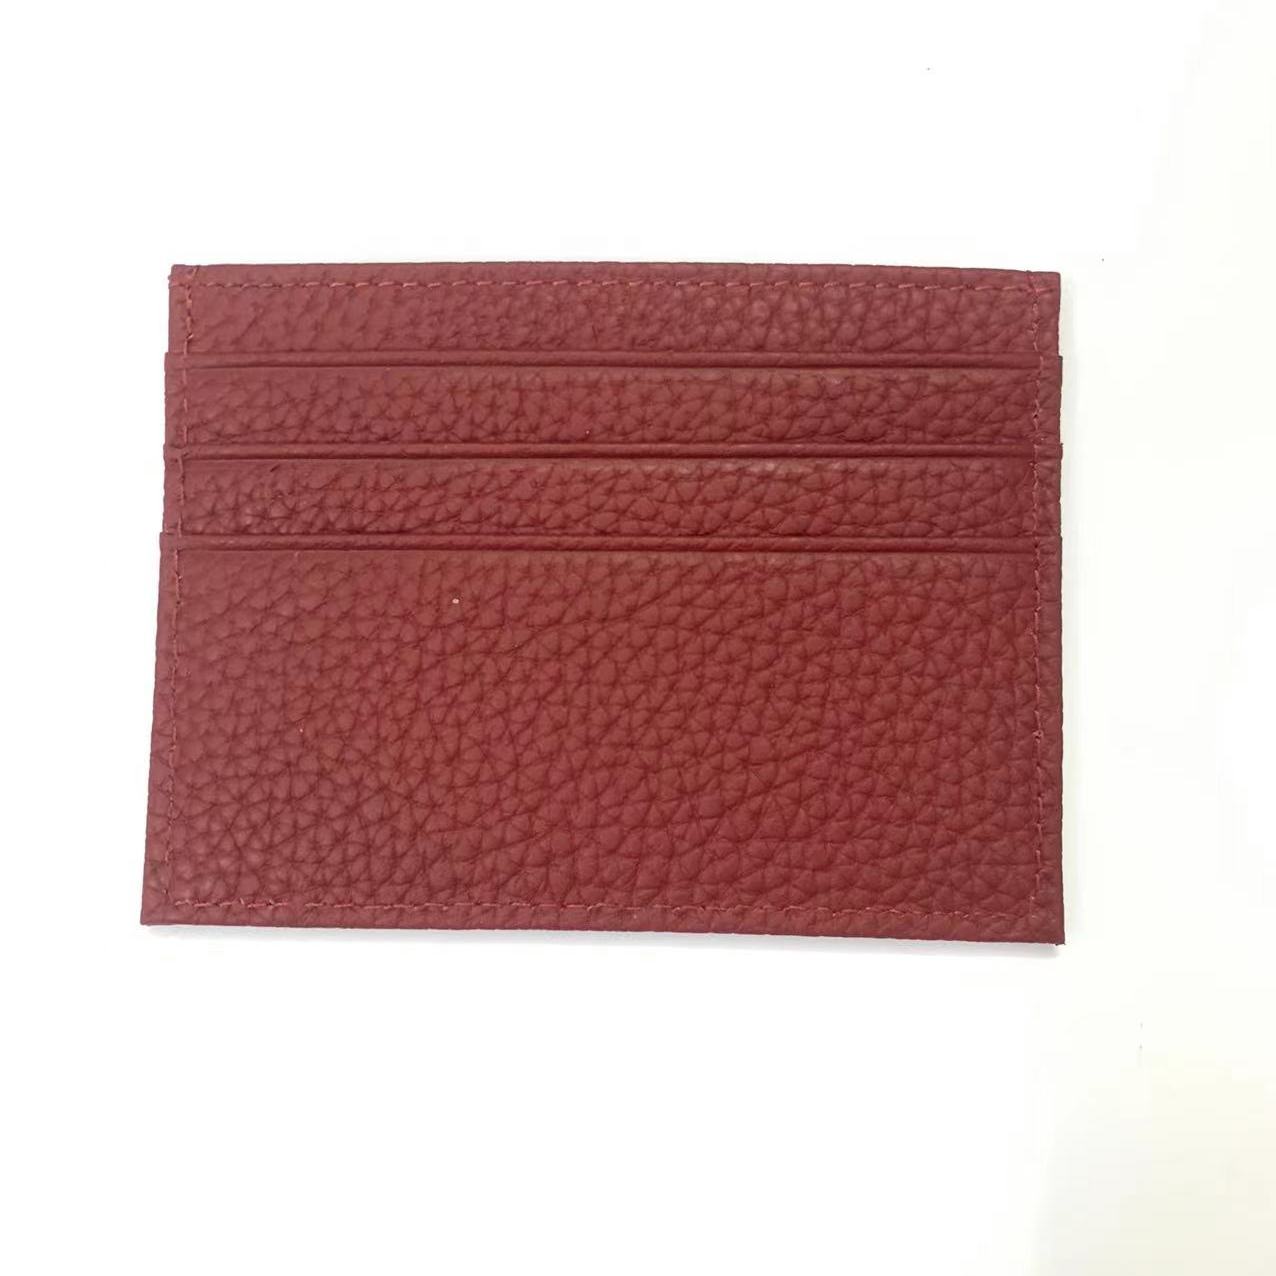 Top Layer Leather Zero Wallet, Super Soft Multi Card Holder Bag, Exquisite  Portable Universal Bag